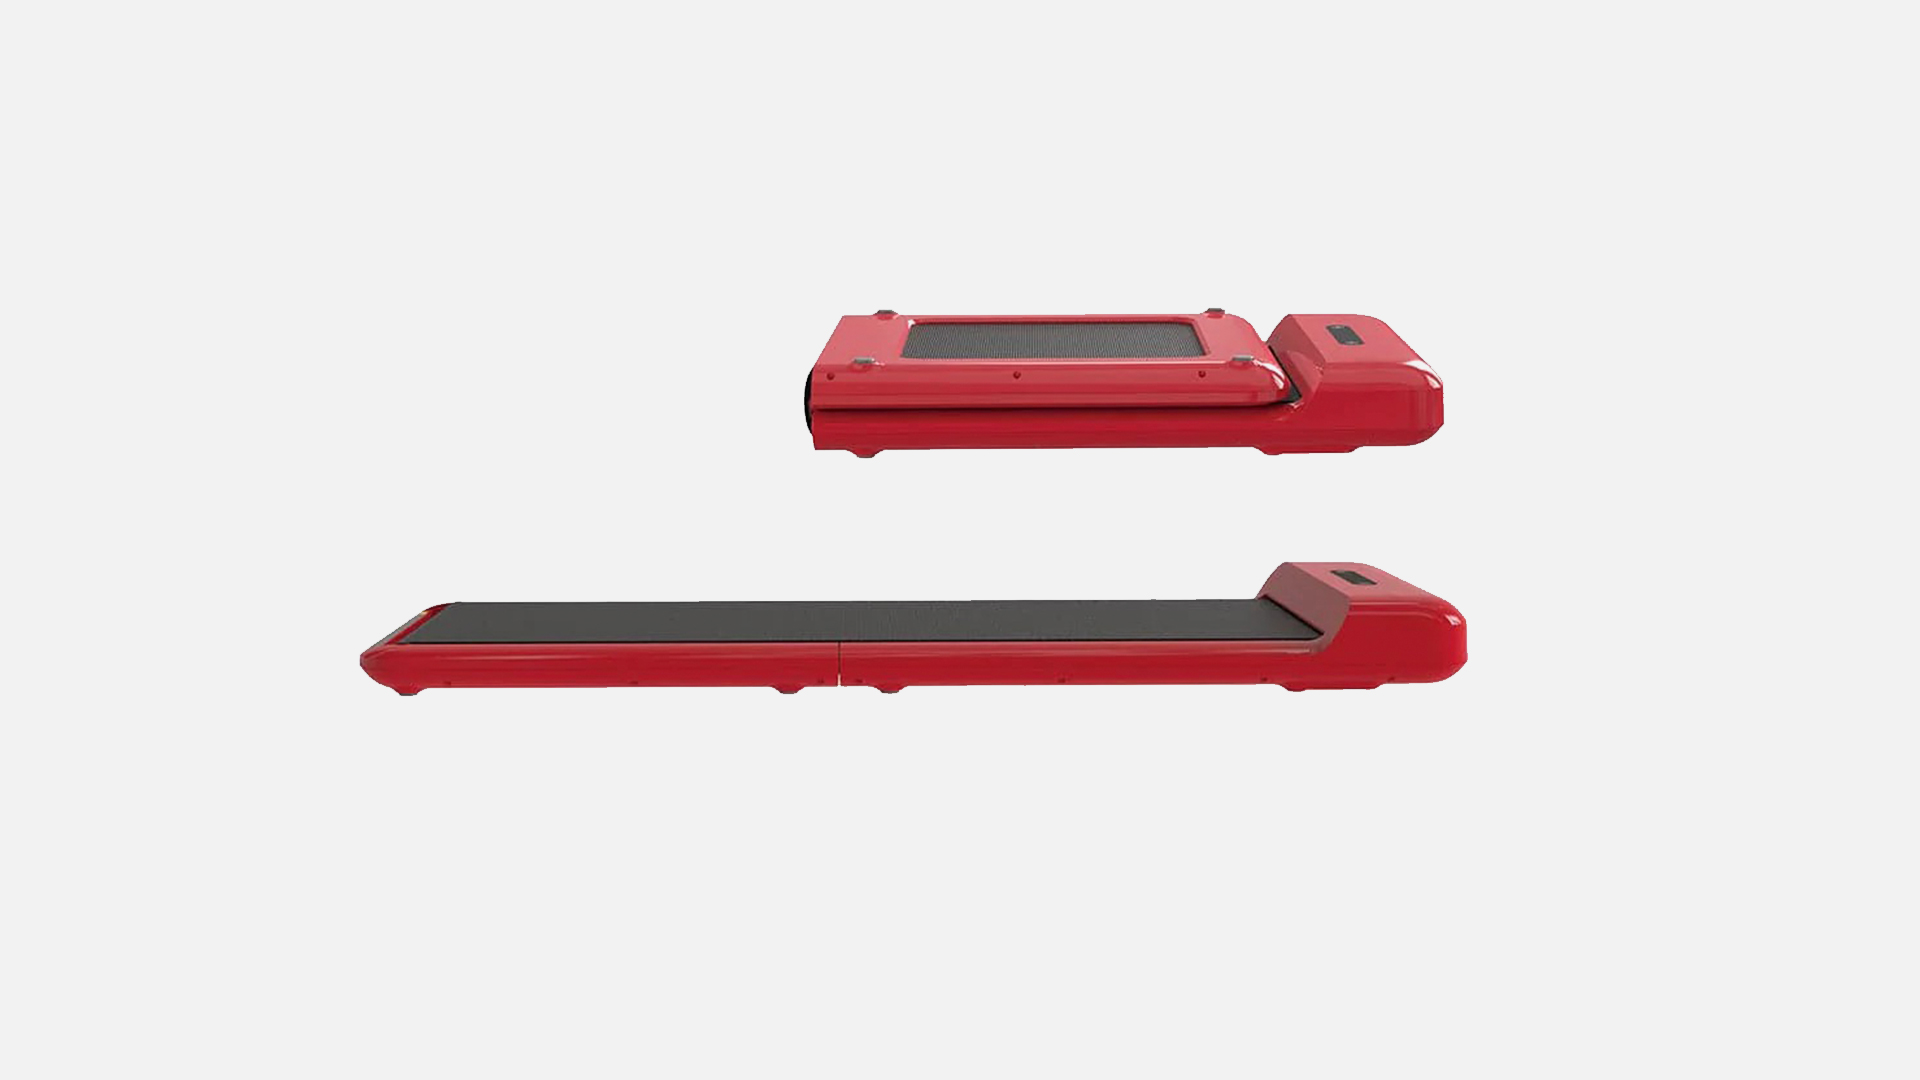 WalkingPad C2 Under Desk Portable Treadmill Double Folding for